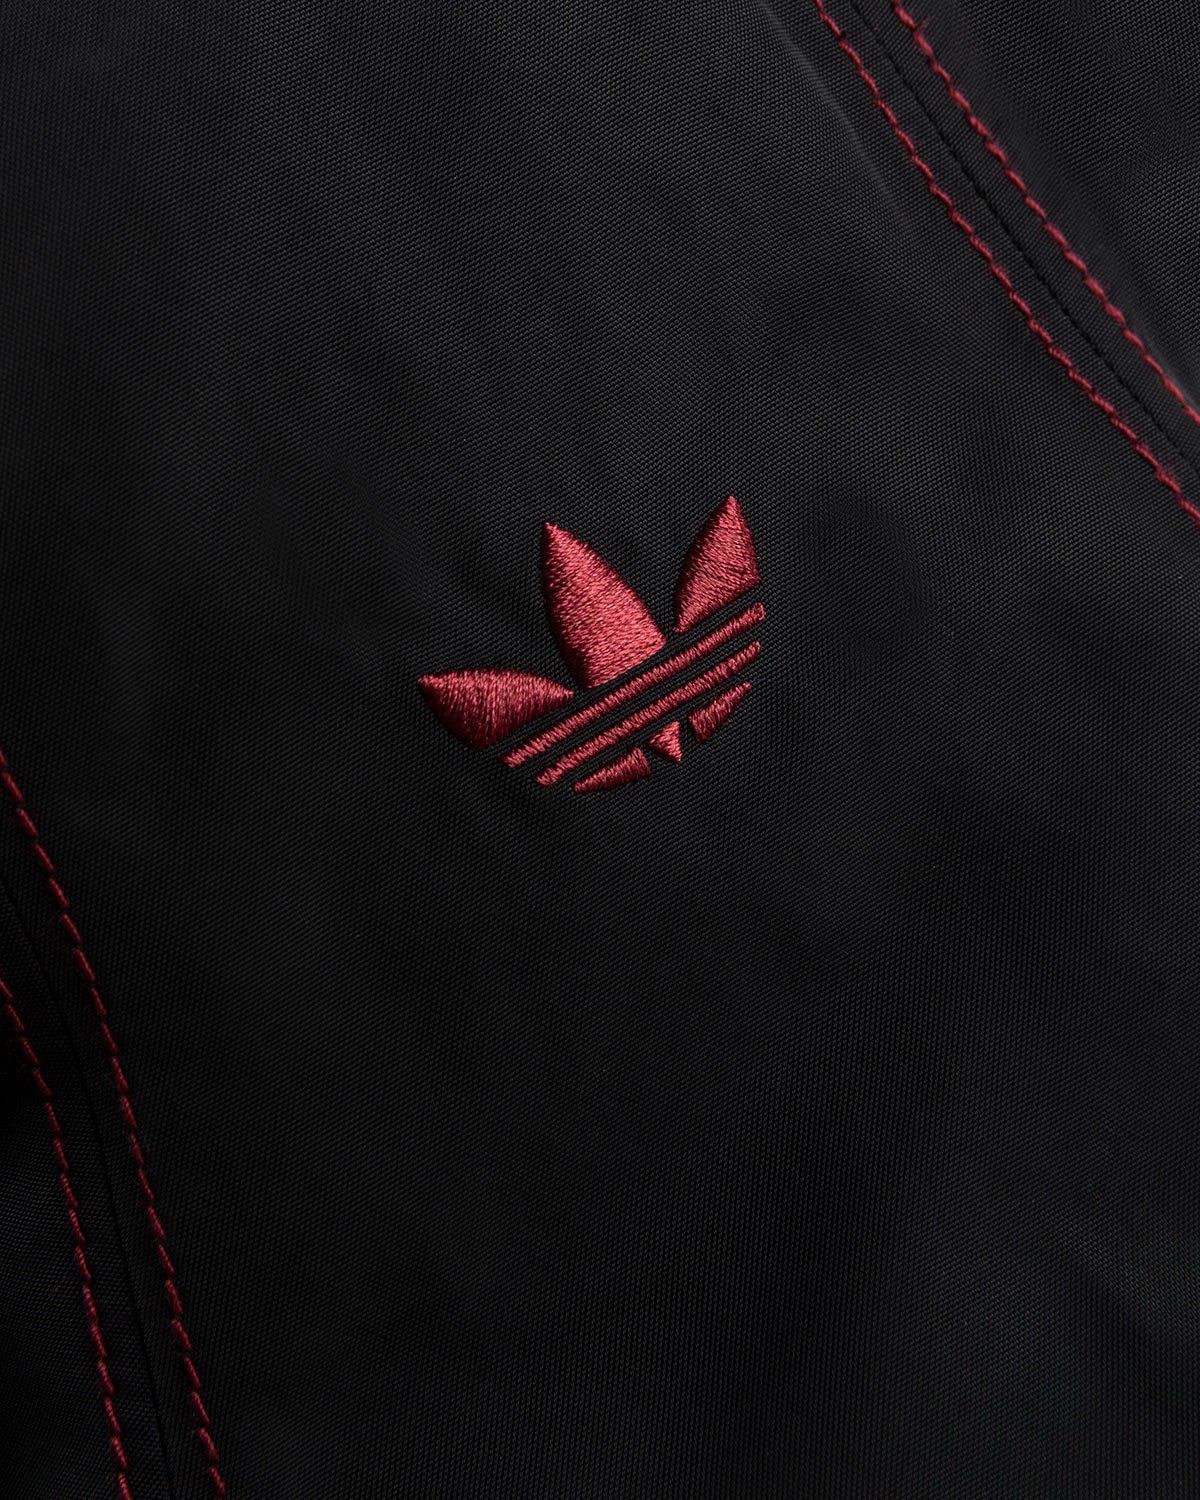 Adidas x Wales Bonner – Sunhat Black Burgundy - Bucket Hats - Red - Image 4